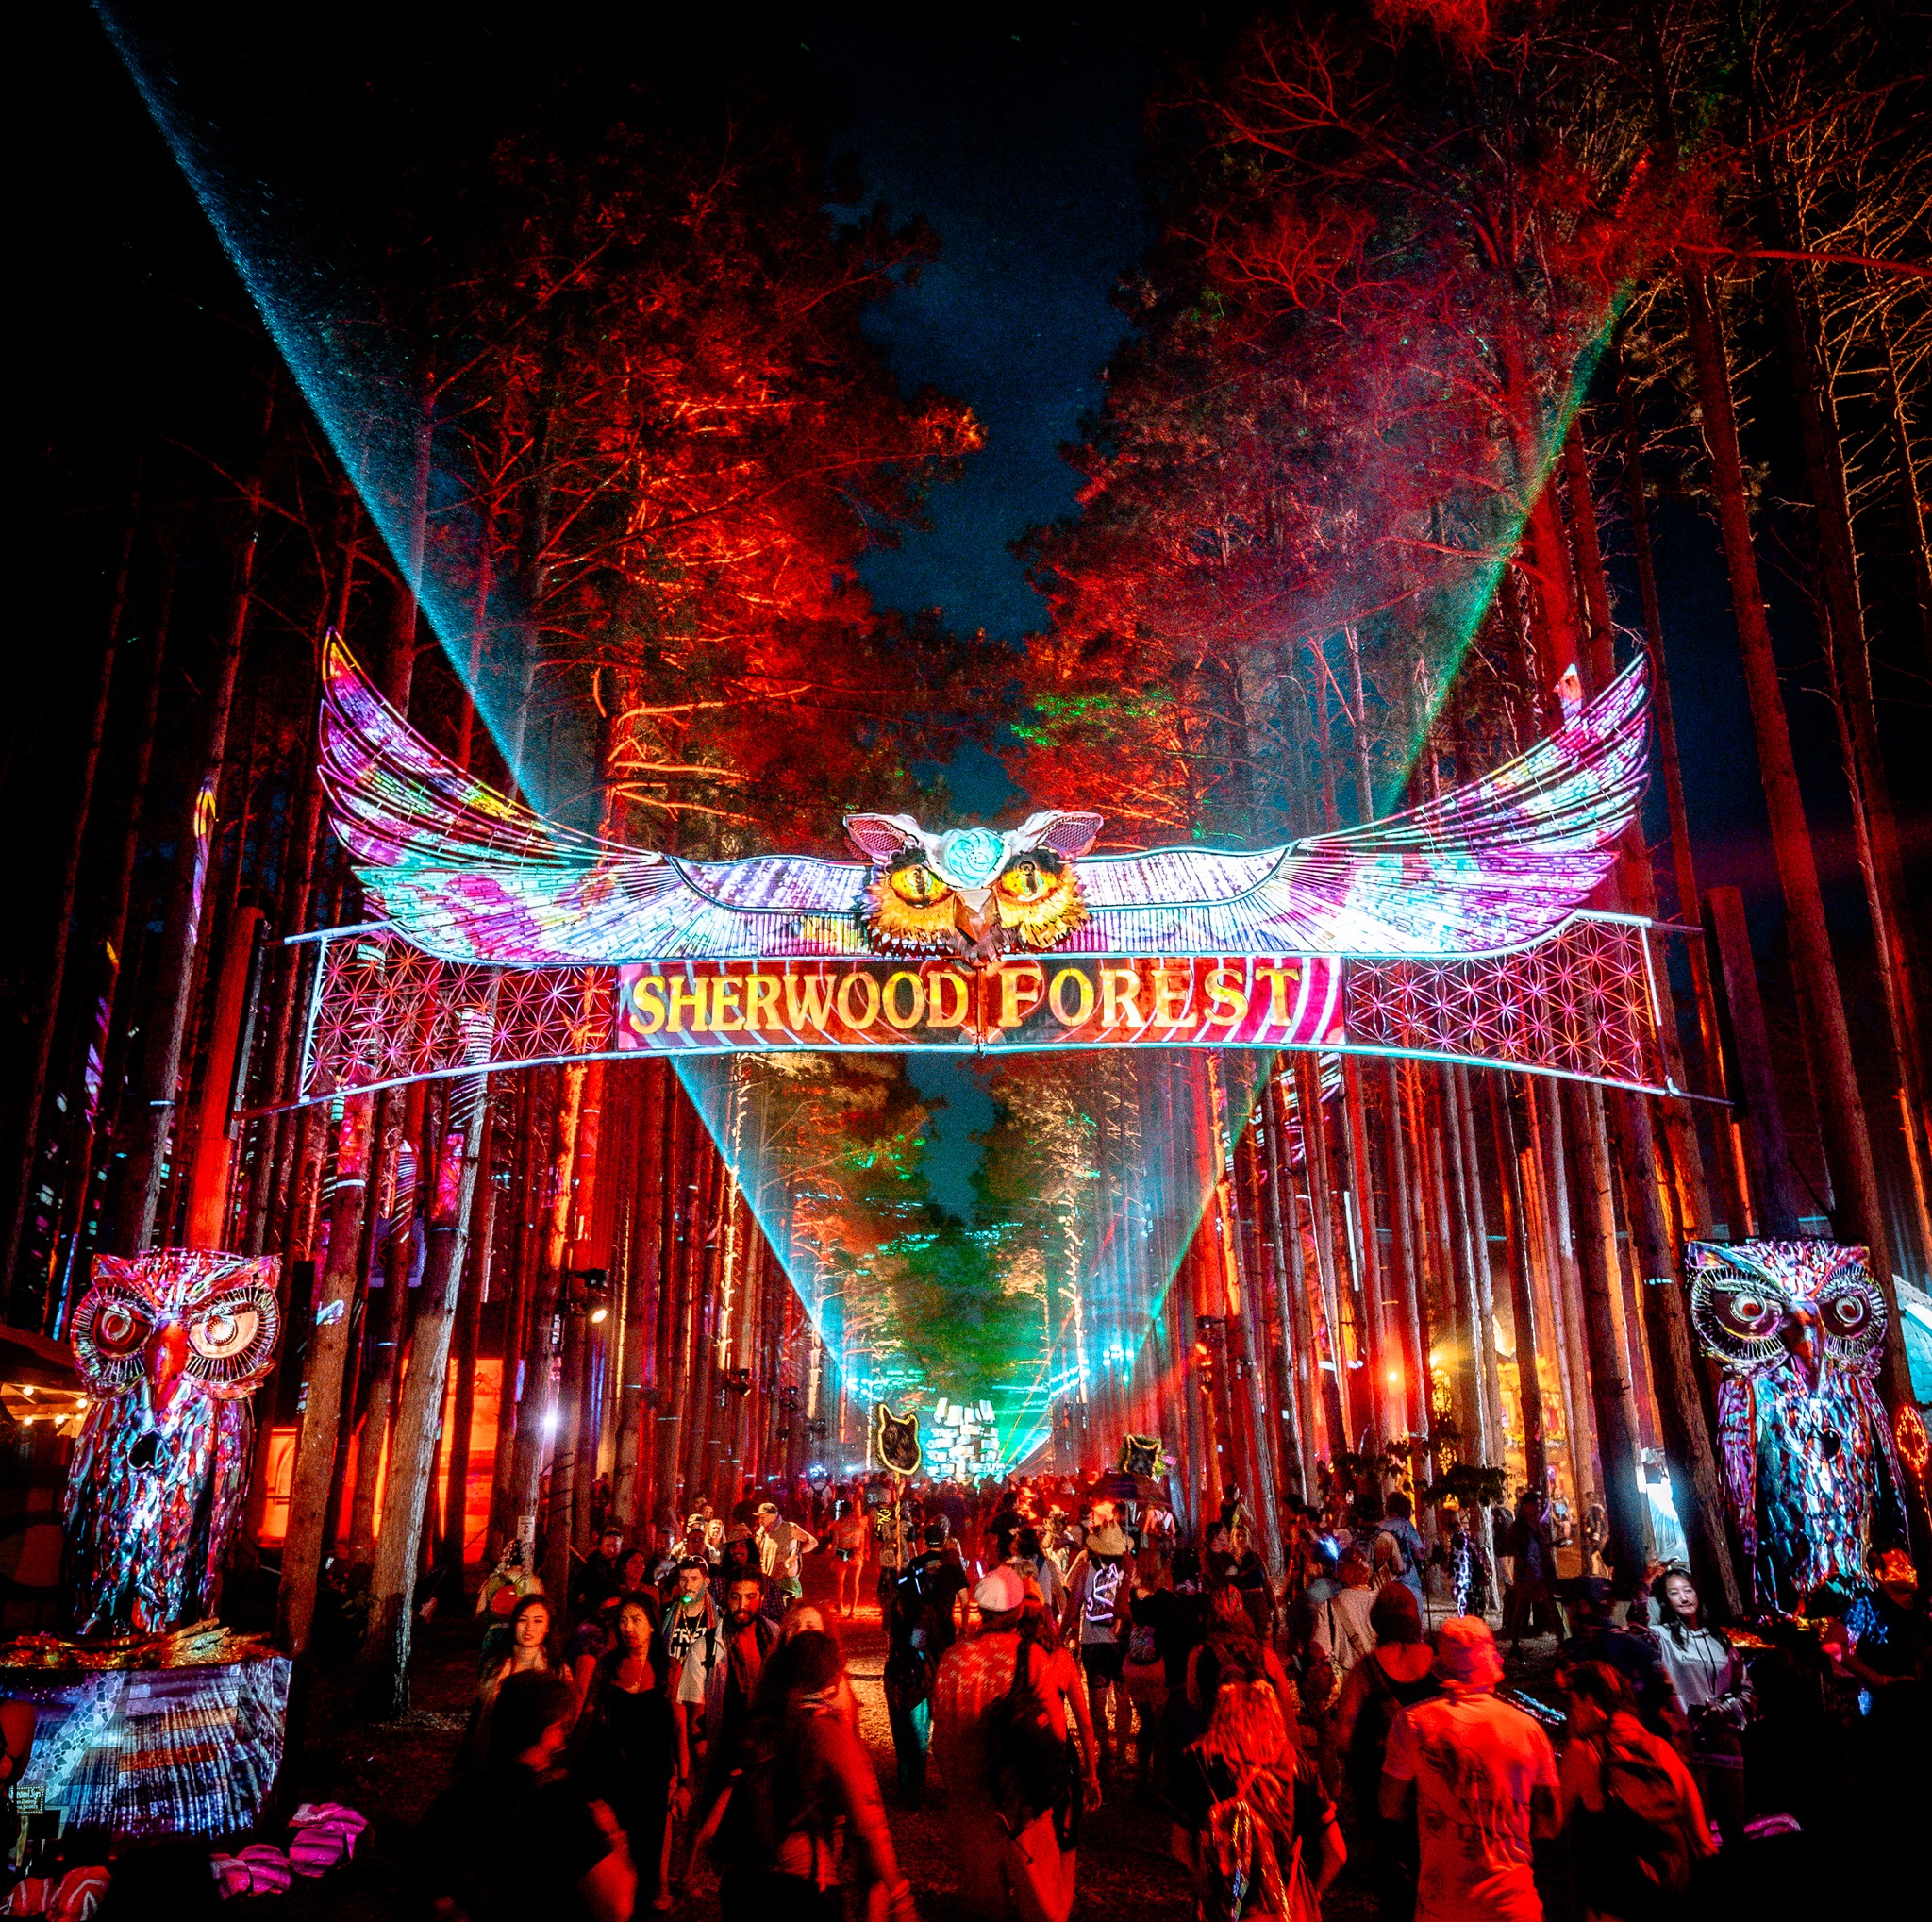 Electric Forest - Festivals Like Burning Man